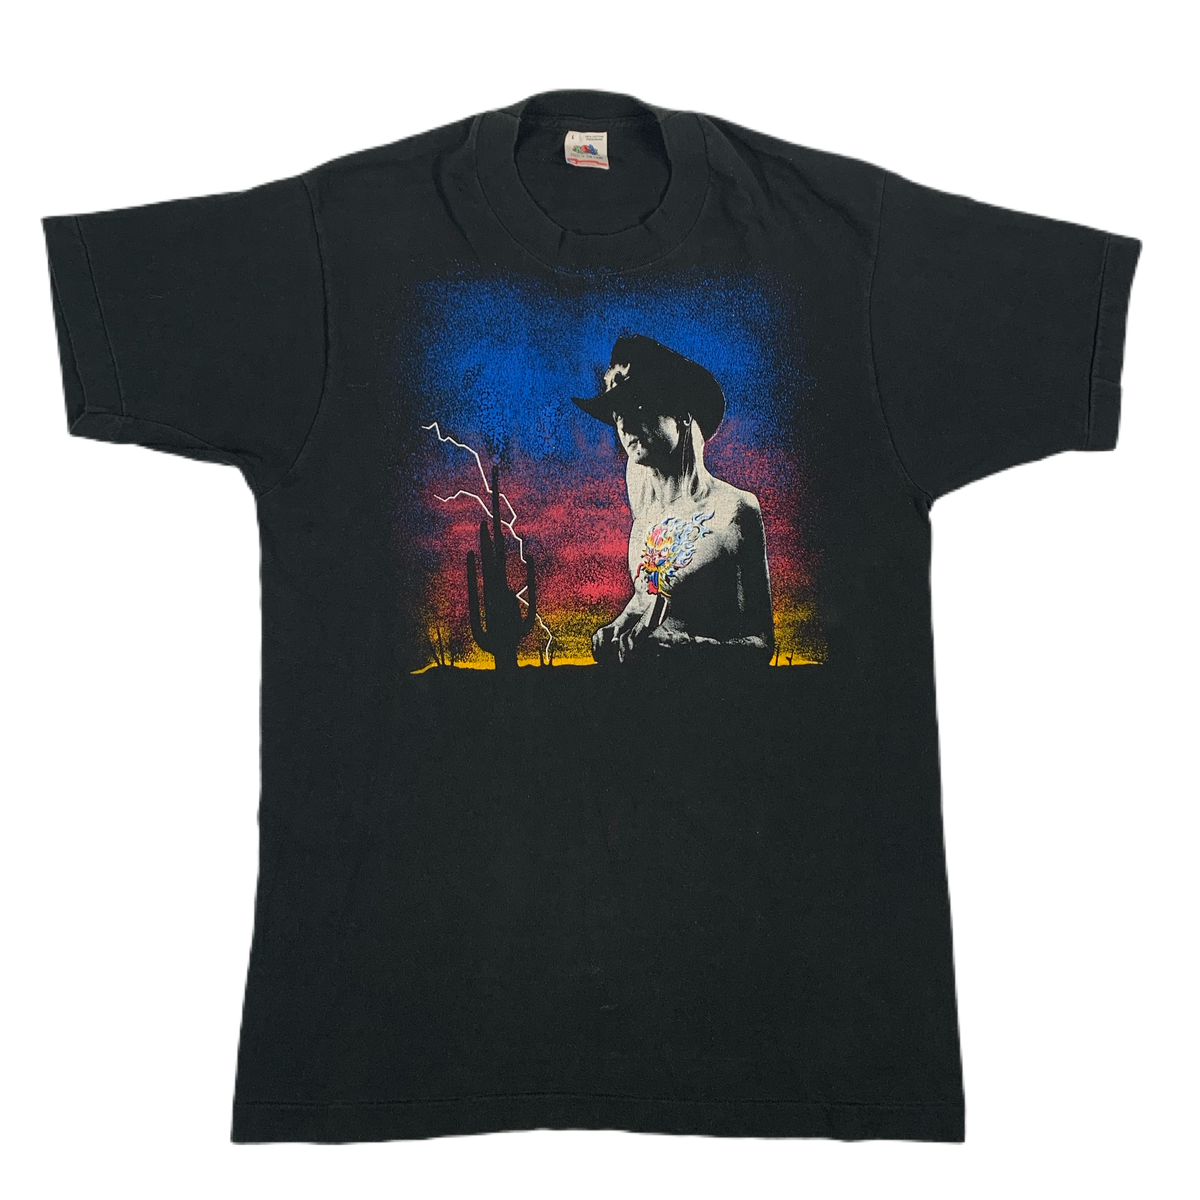 Vintage Johnny Winter “The Winter Of ‘88” T-Shirt - jointcustodydc